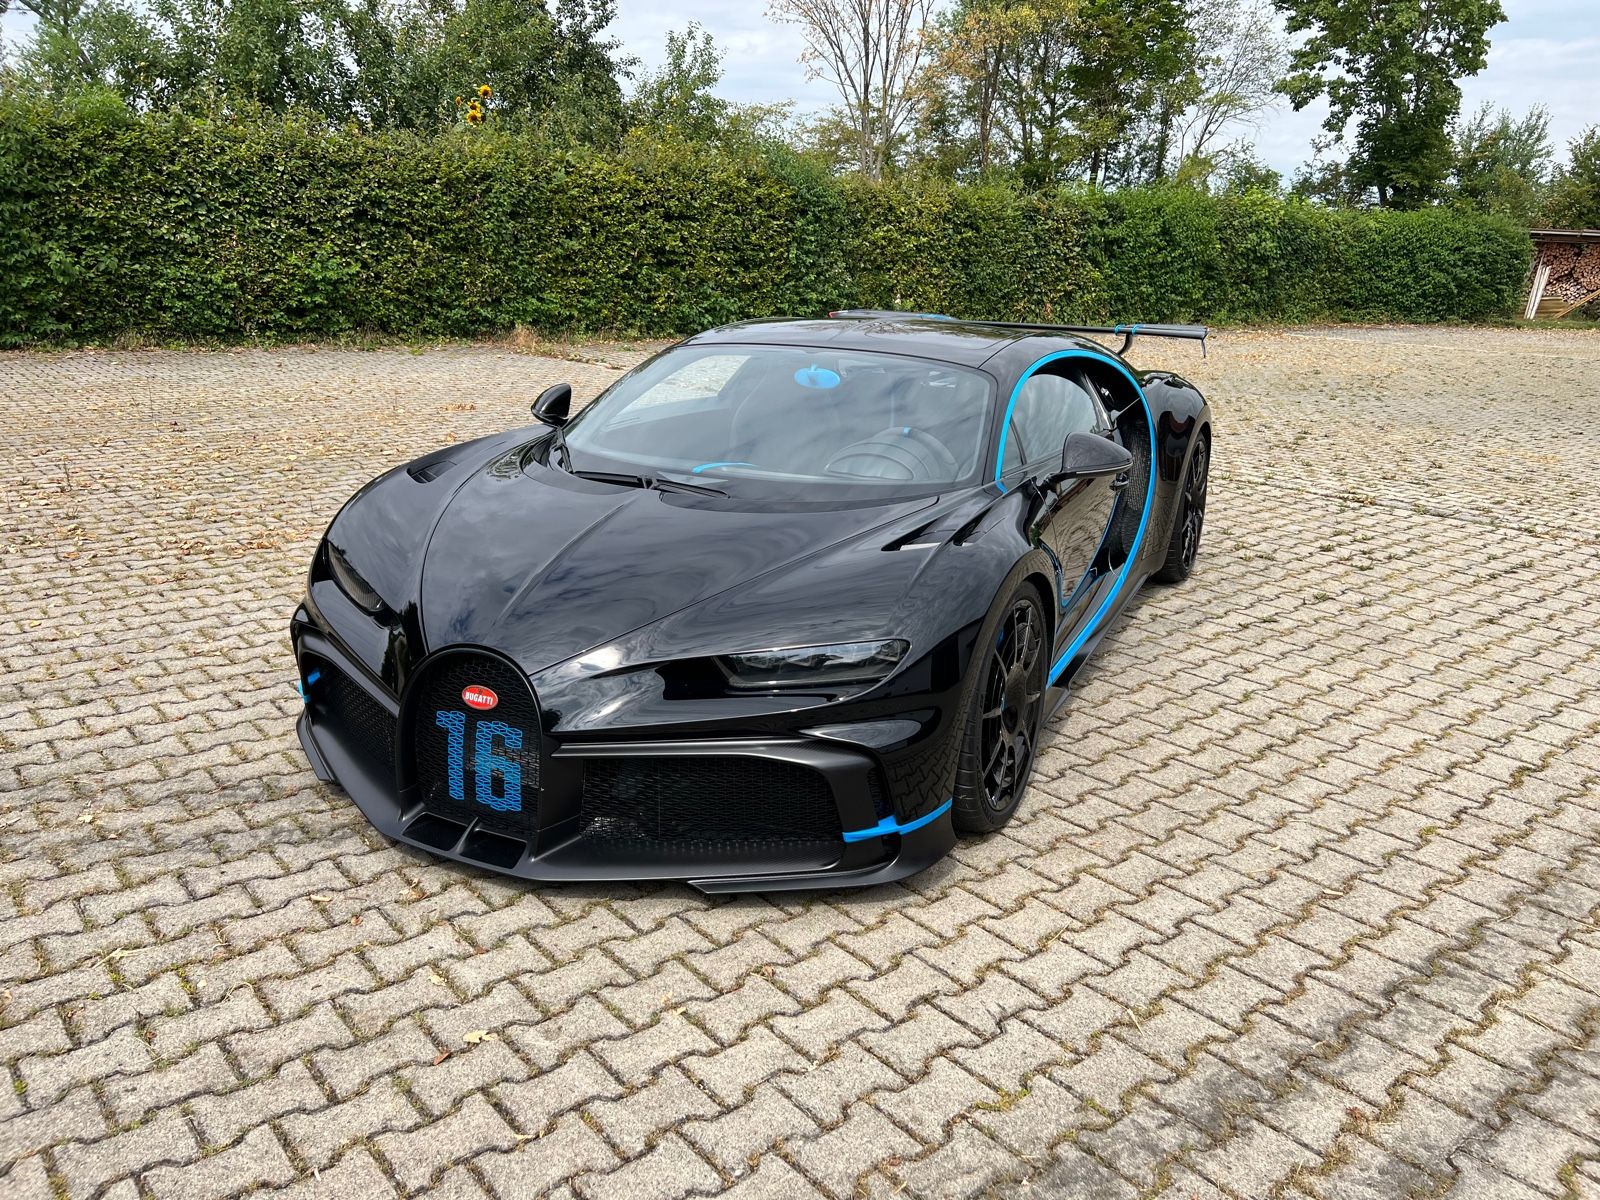 Bugatti PUR SPORT 1 of 60 - Griesheimer & Eisele - For sale on LuxuryPulse.